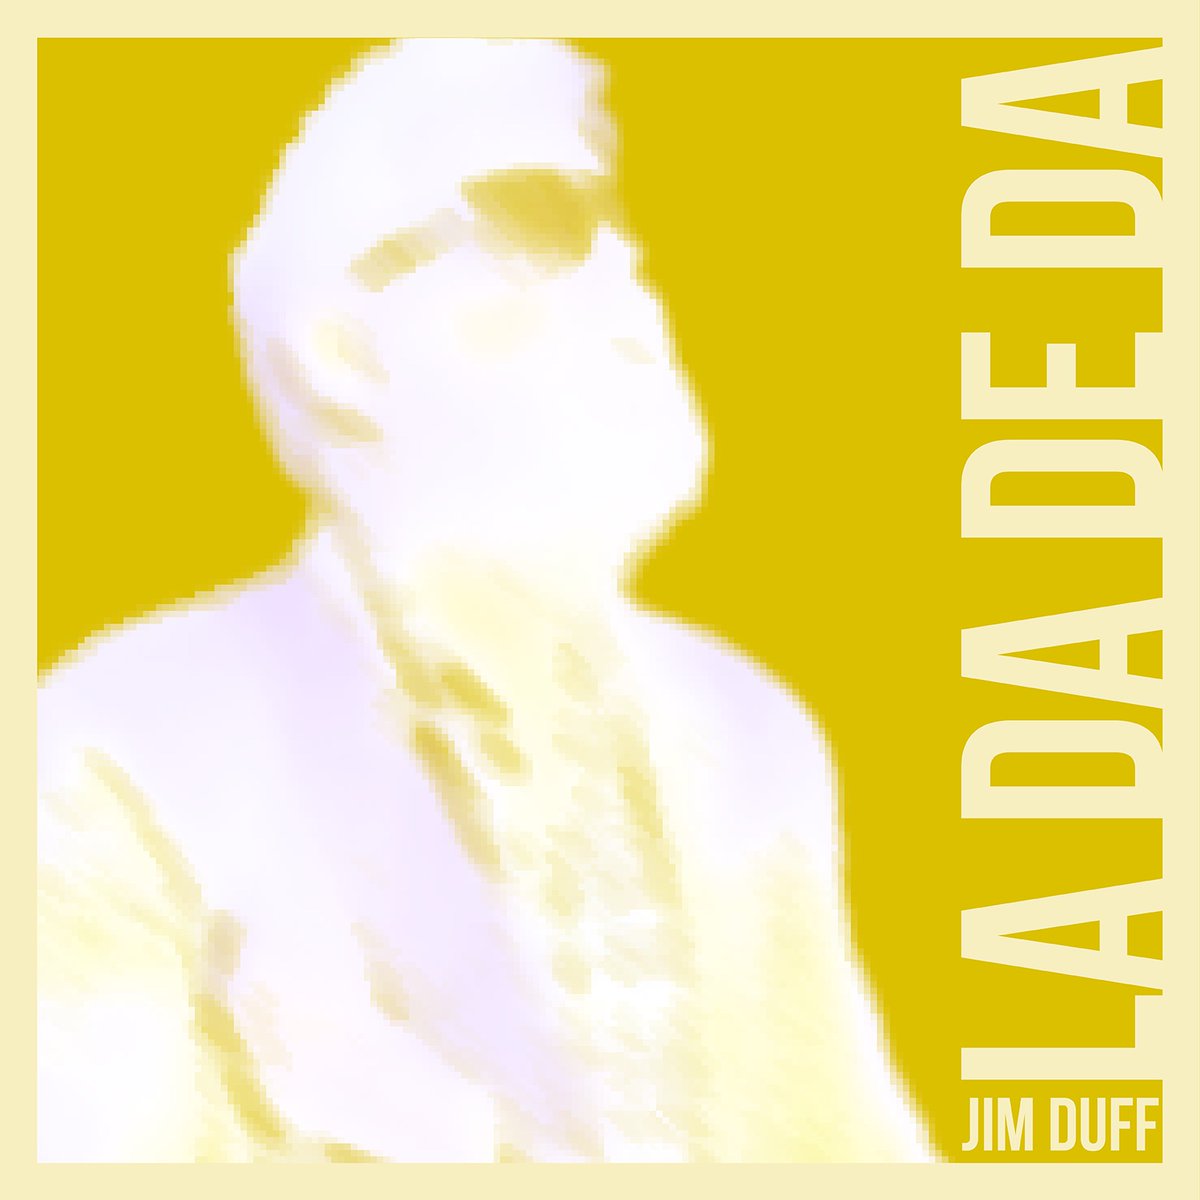 Discover La Da De Da by Jim Duff 
youtu.be/nCMdkOiaZSg?si… 
via @HeyGroover #GrooverEffect